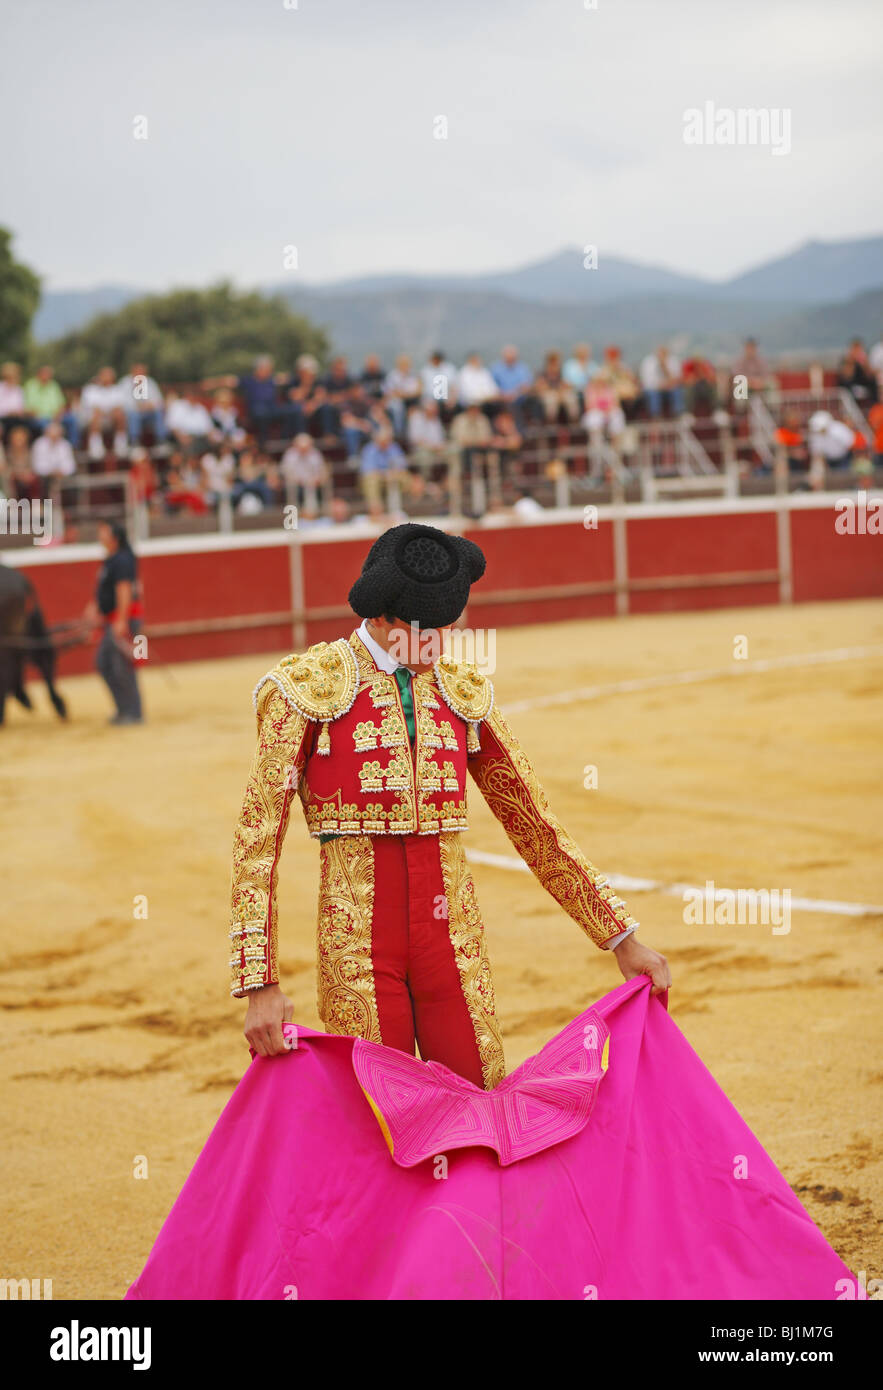 Matador preparando para la corrida de toros, corrida en Alpedrete, España Foto de stock